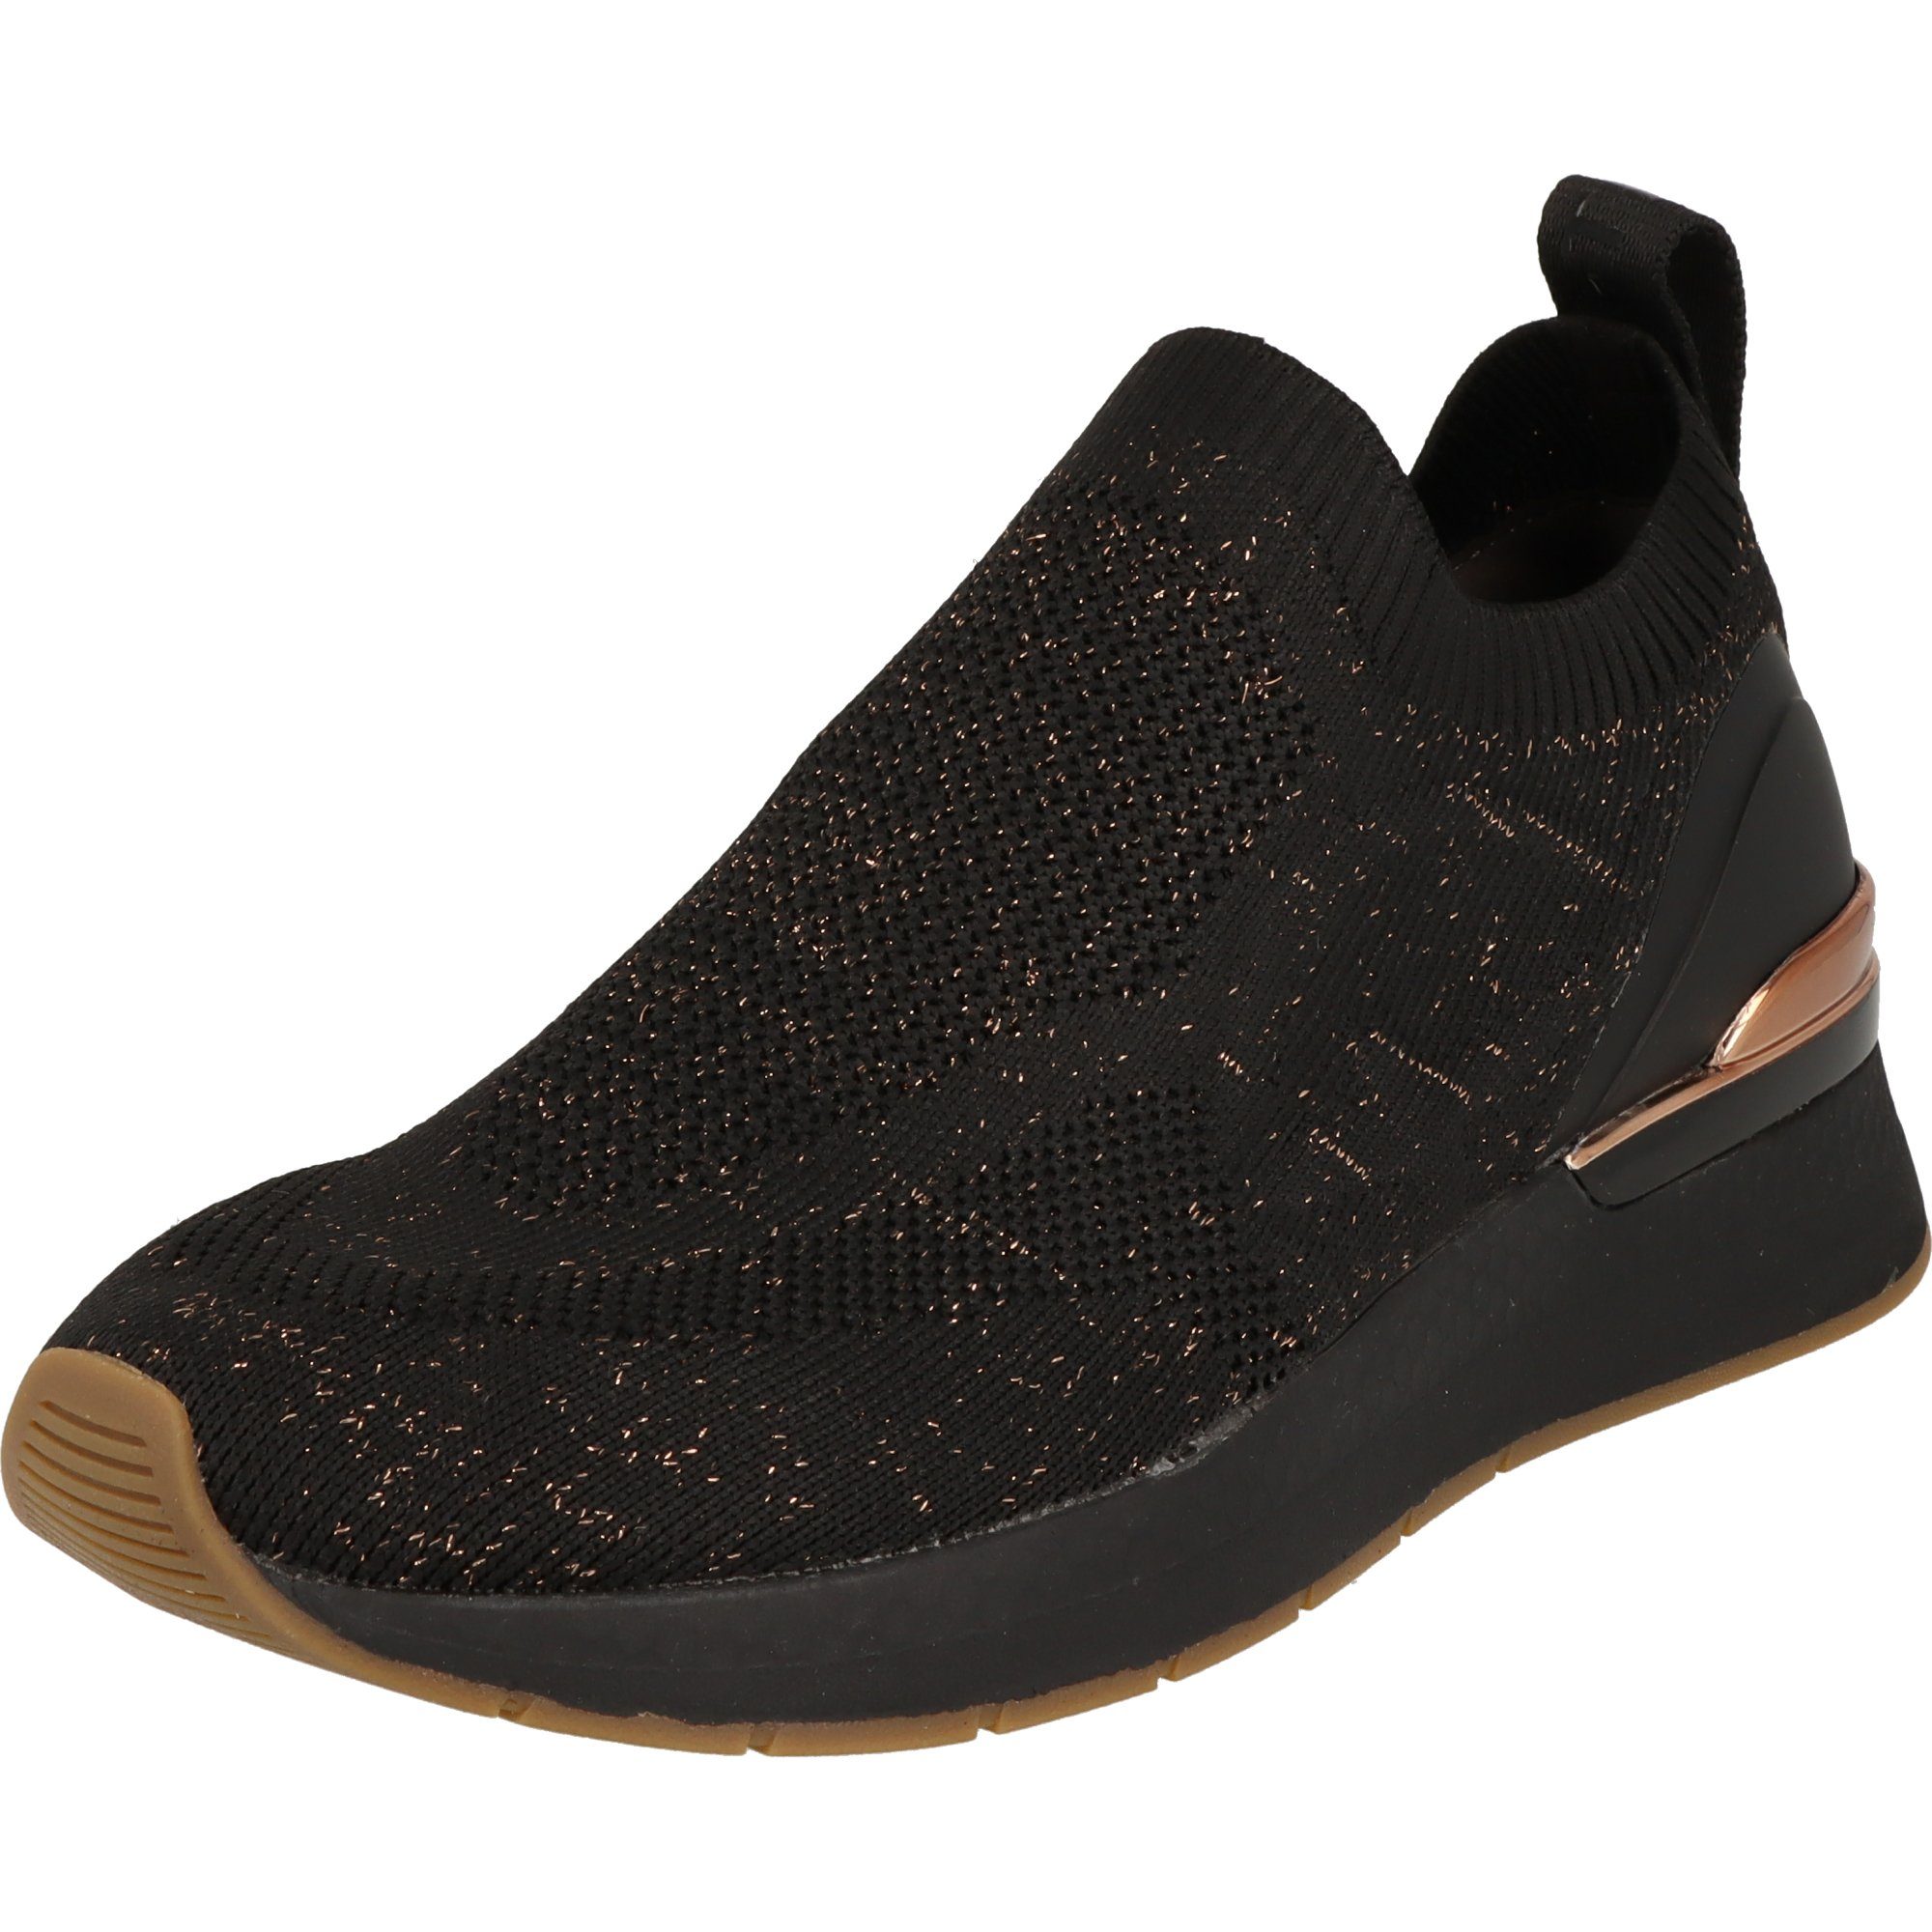 Slip-On Damen Tamaris Glitzer 1-24704-41 Komfort Black/Copper Halbschuhe Schuhe Sneaker